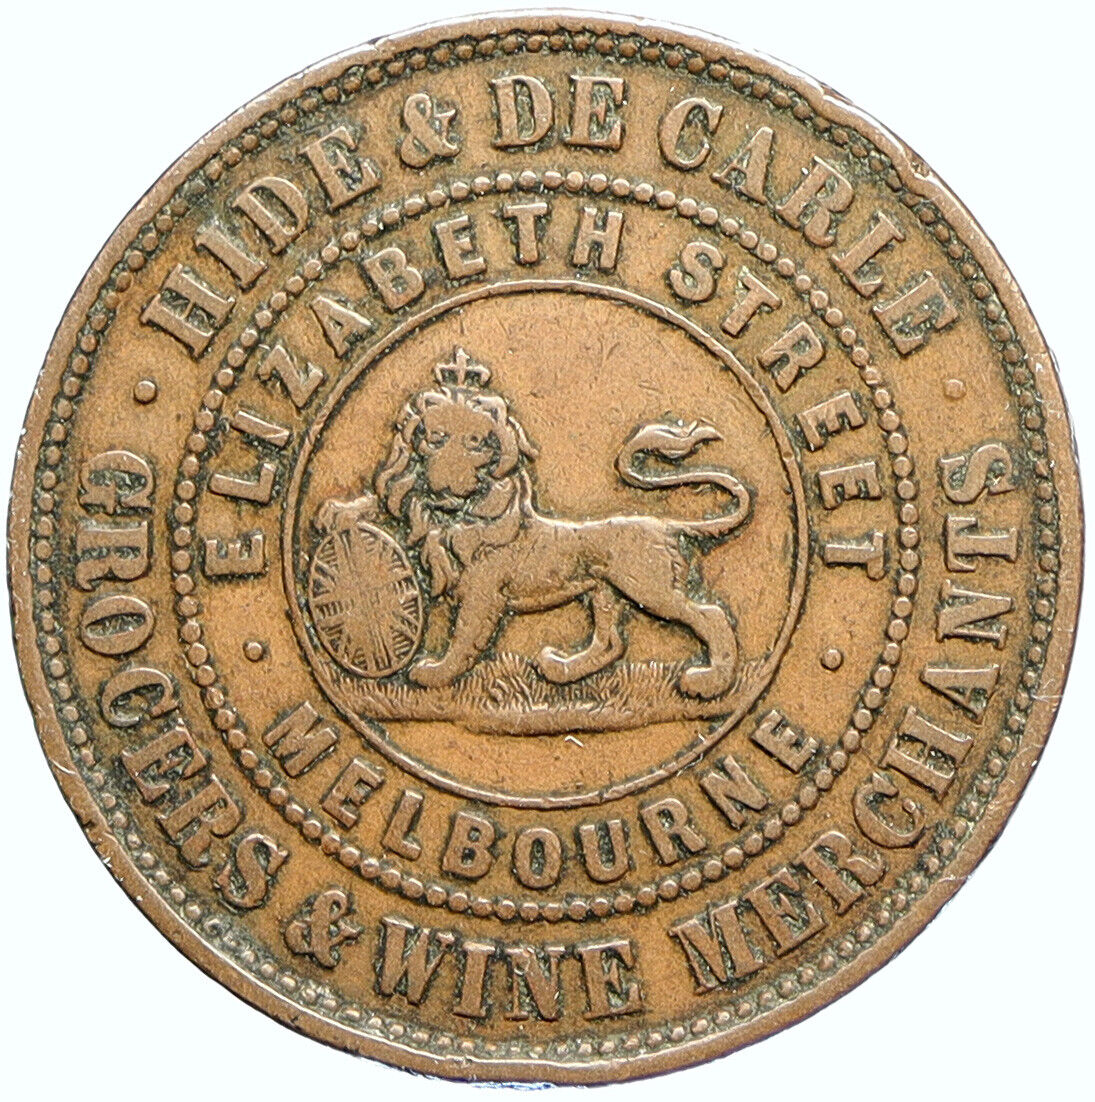 1858 AUSTRALIA Melbourne Victoria HIDE DE CARLE GROCER Penny Trade Token i113336